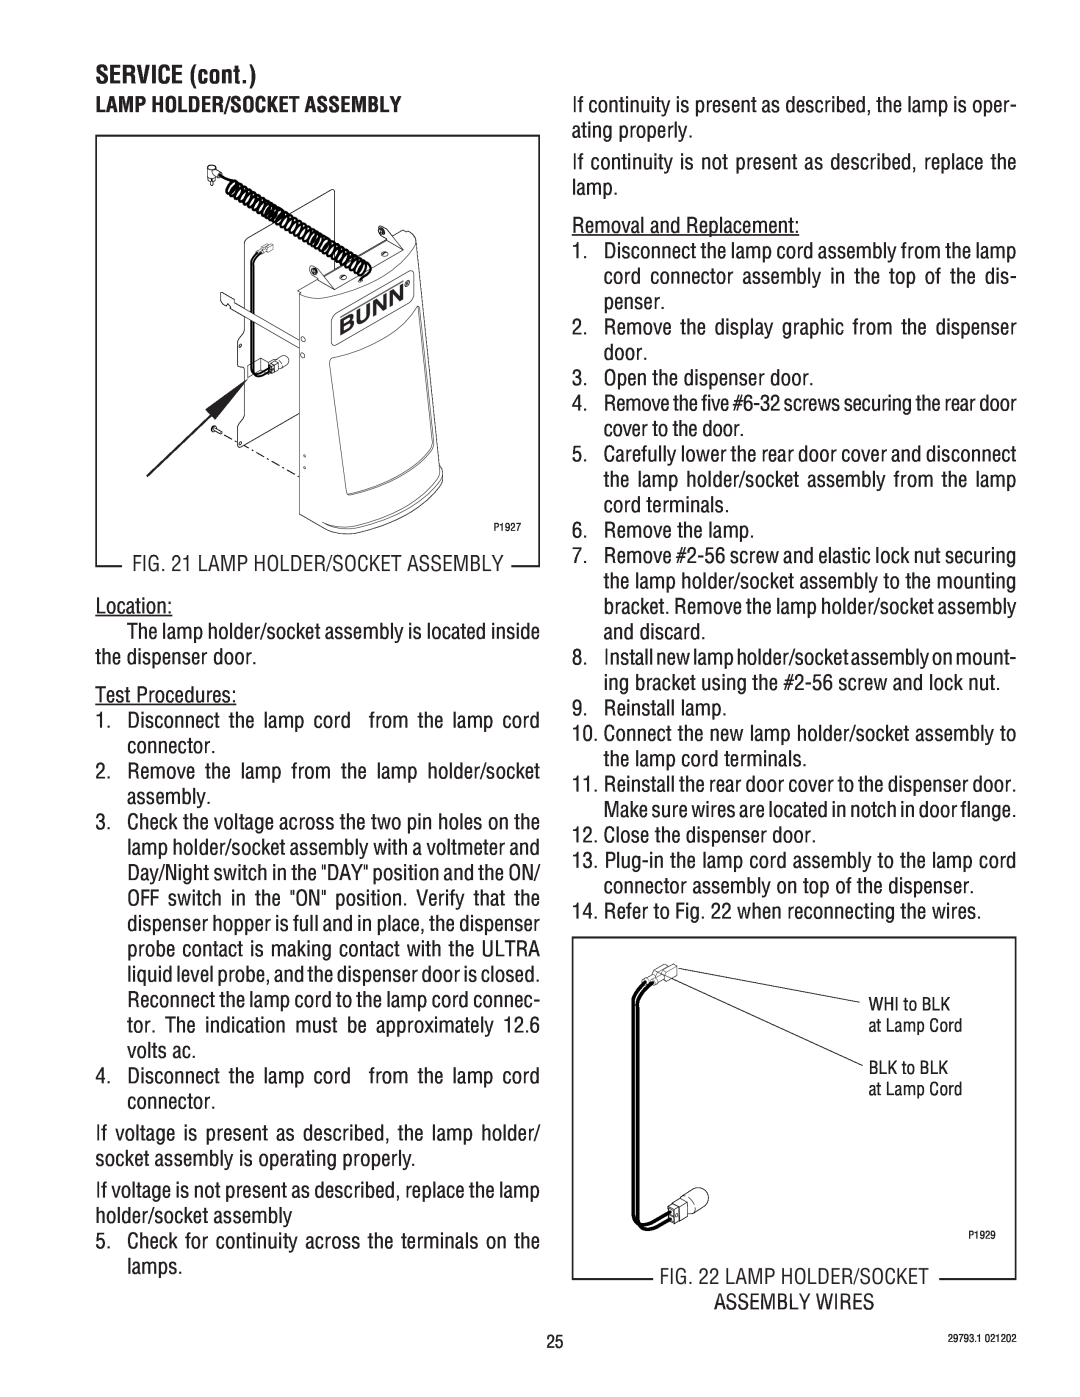 Bunn dispenser service manual Lamp Holder/Socket Assembly, SERVICE cont 